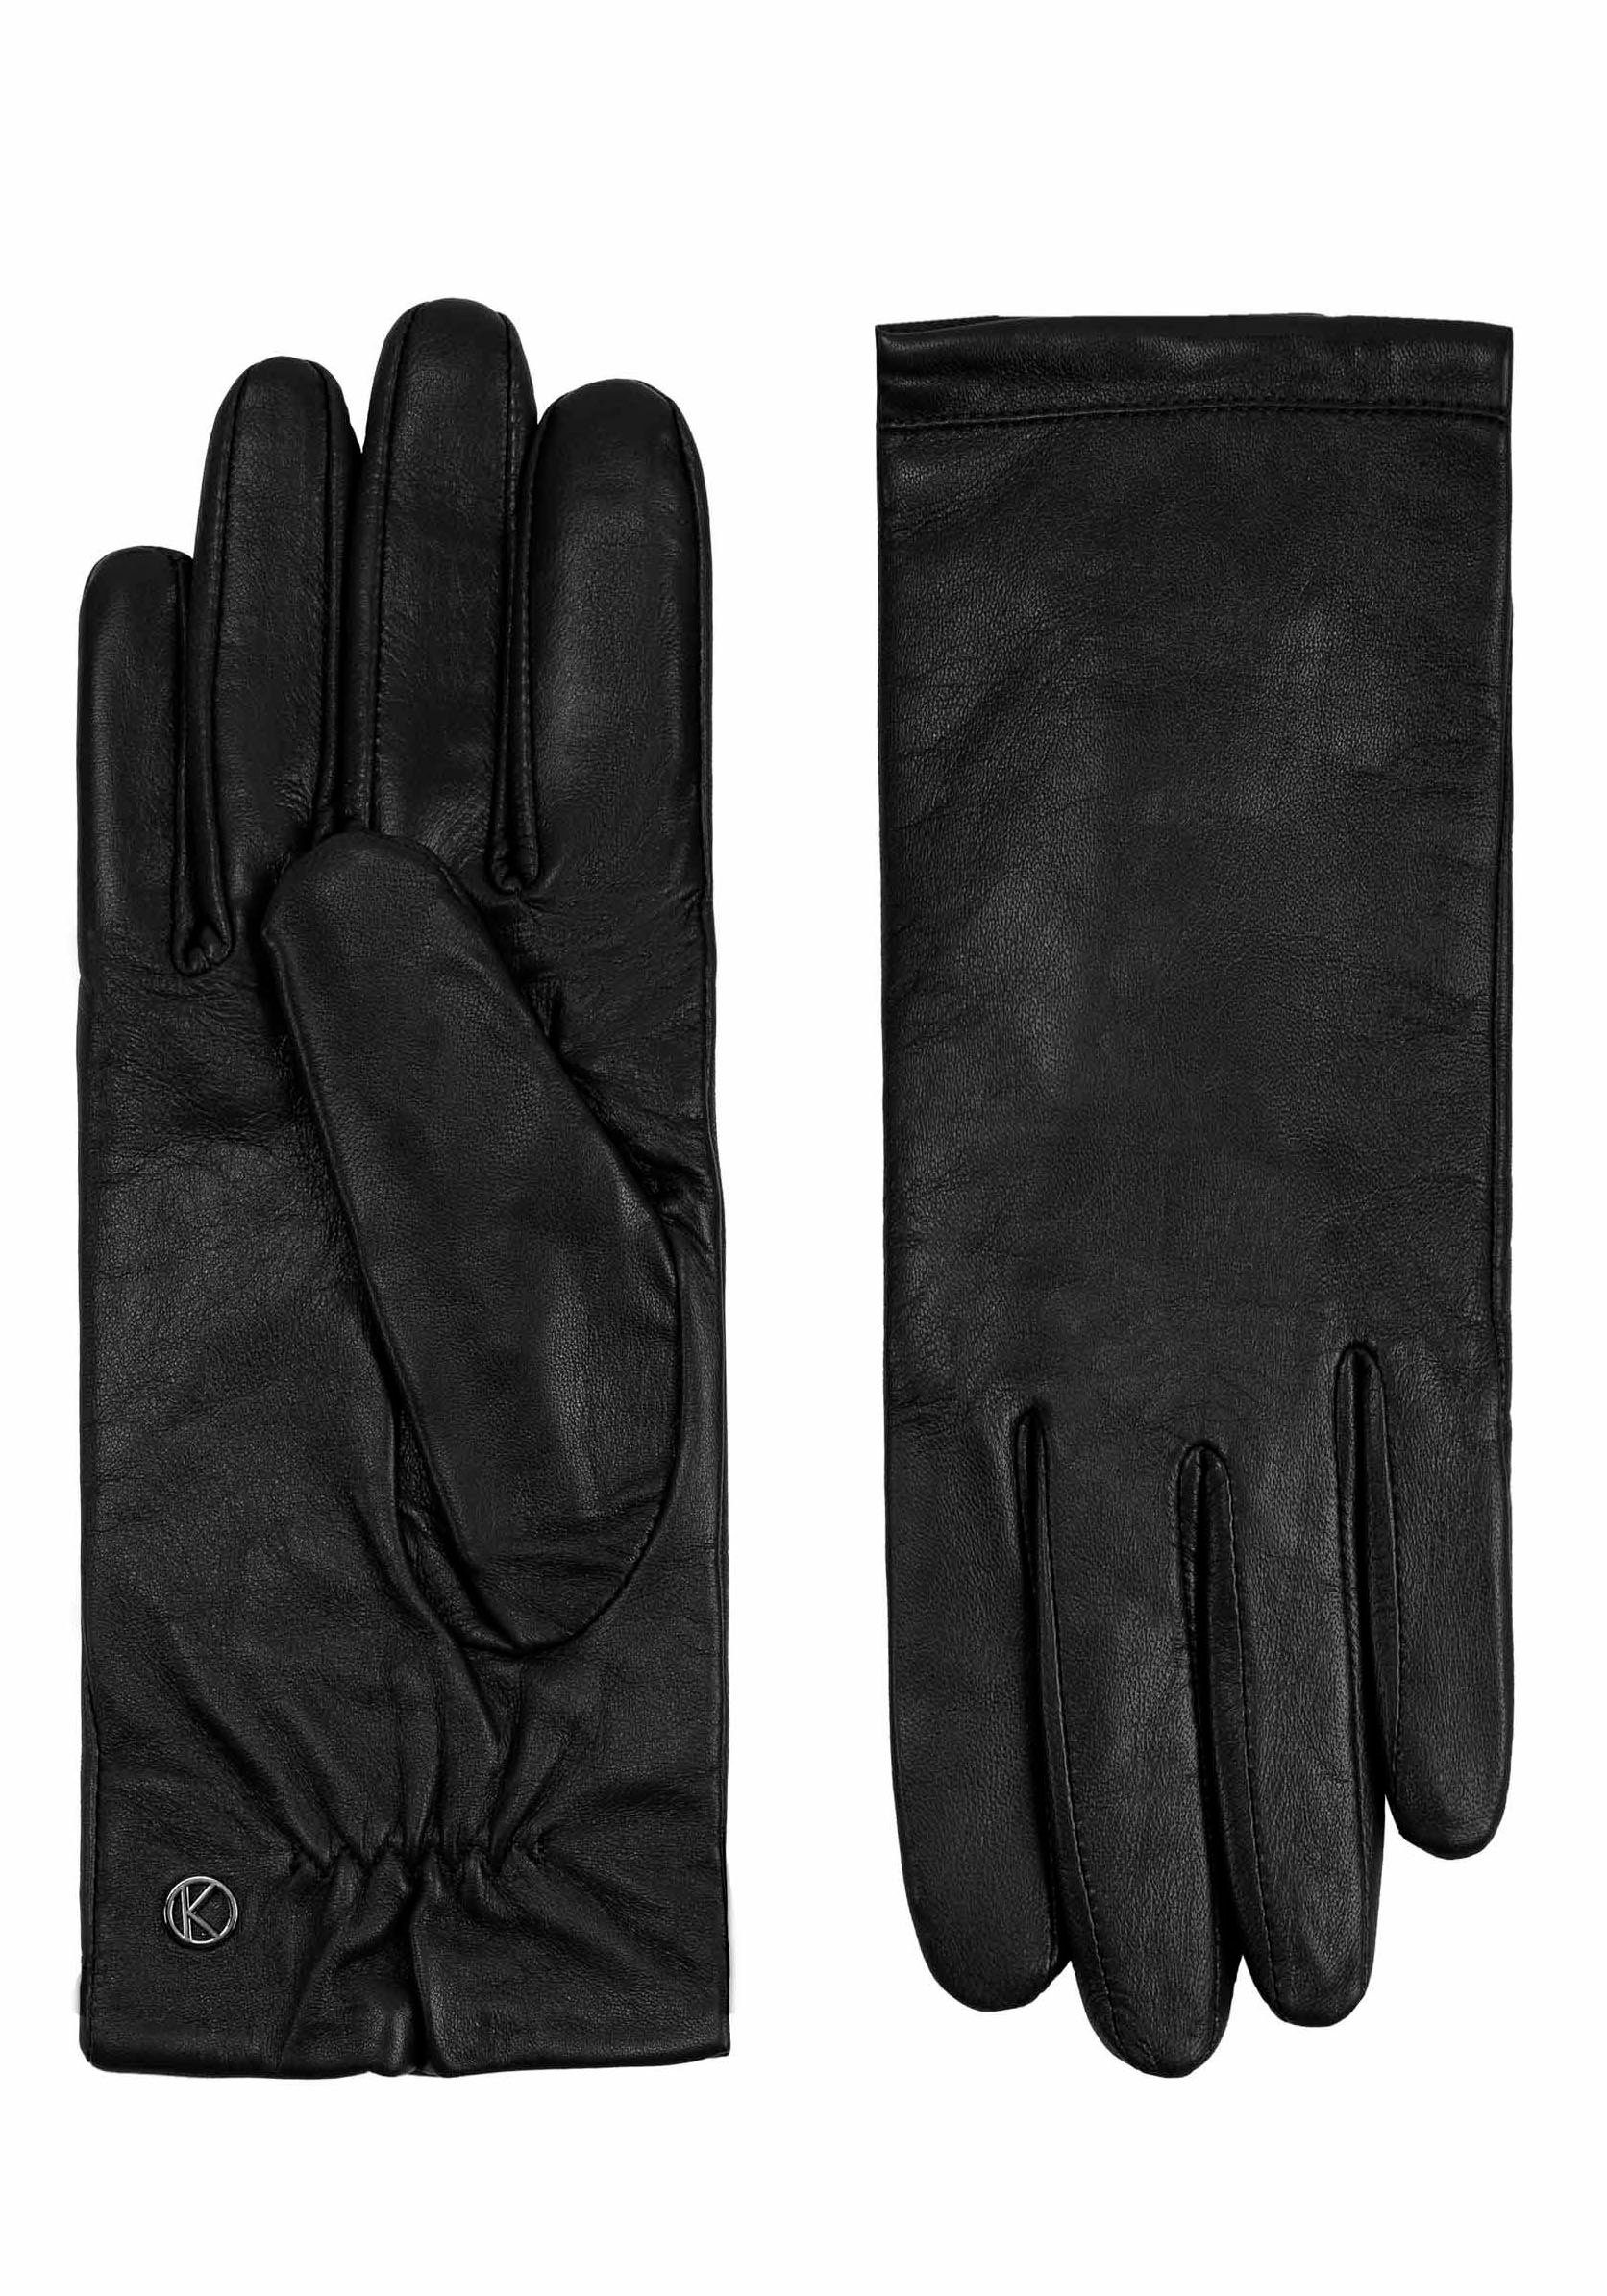 KESSLER Lederhandschuhe Chelsea Touchfunktion, Zierbiesen black Passform, schlanke